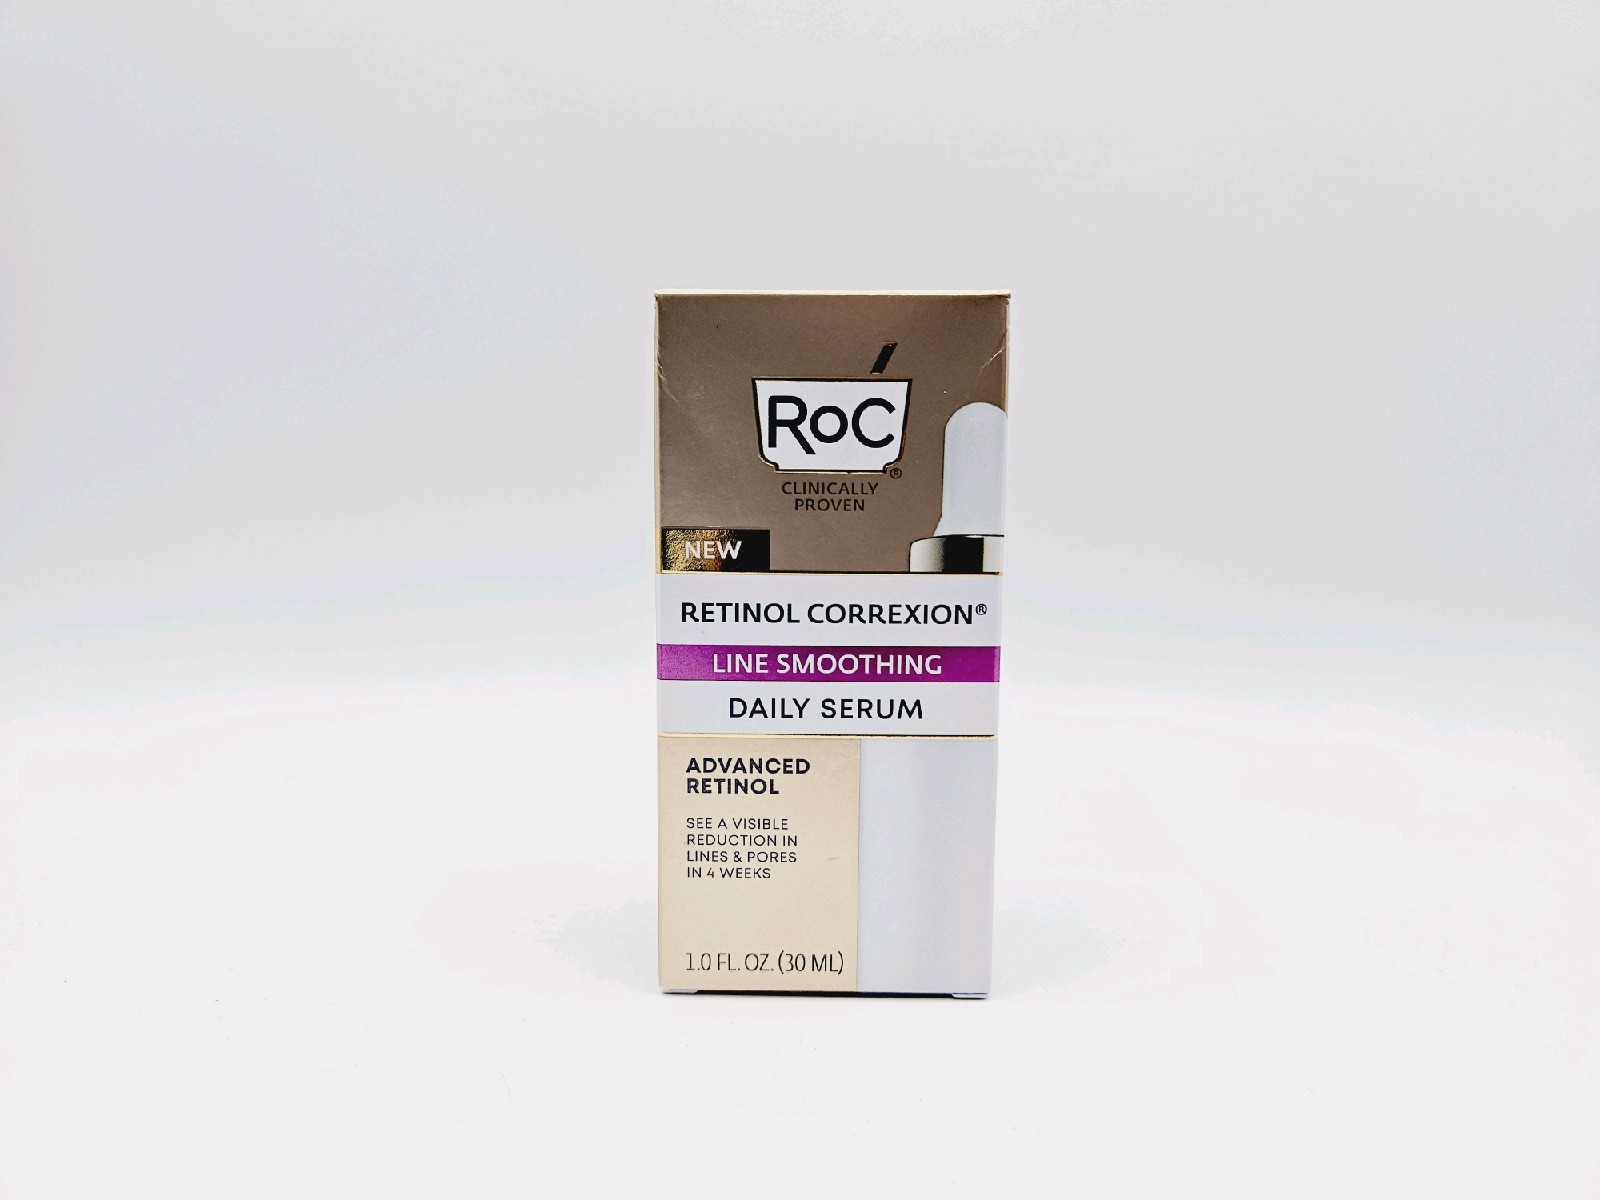 RoC Retinol Correxion Retinol Serum1.0 oz